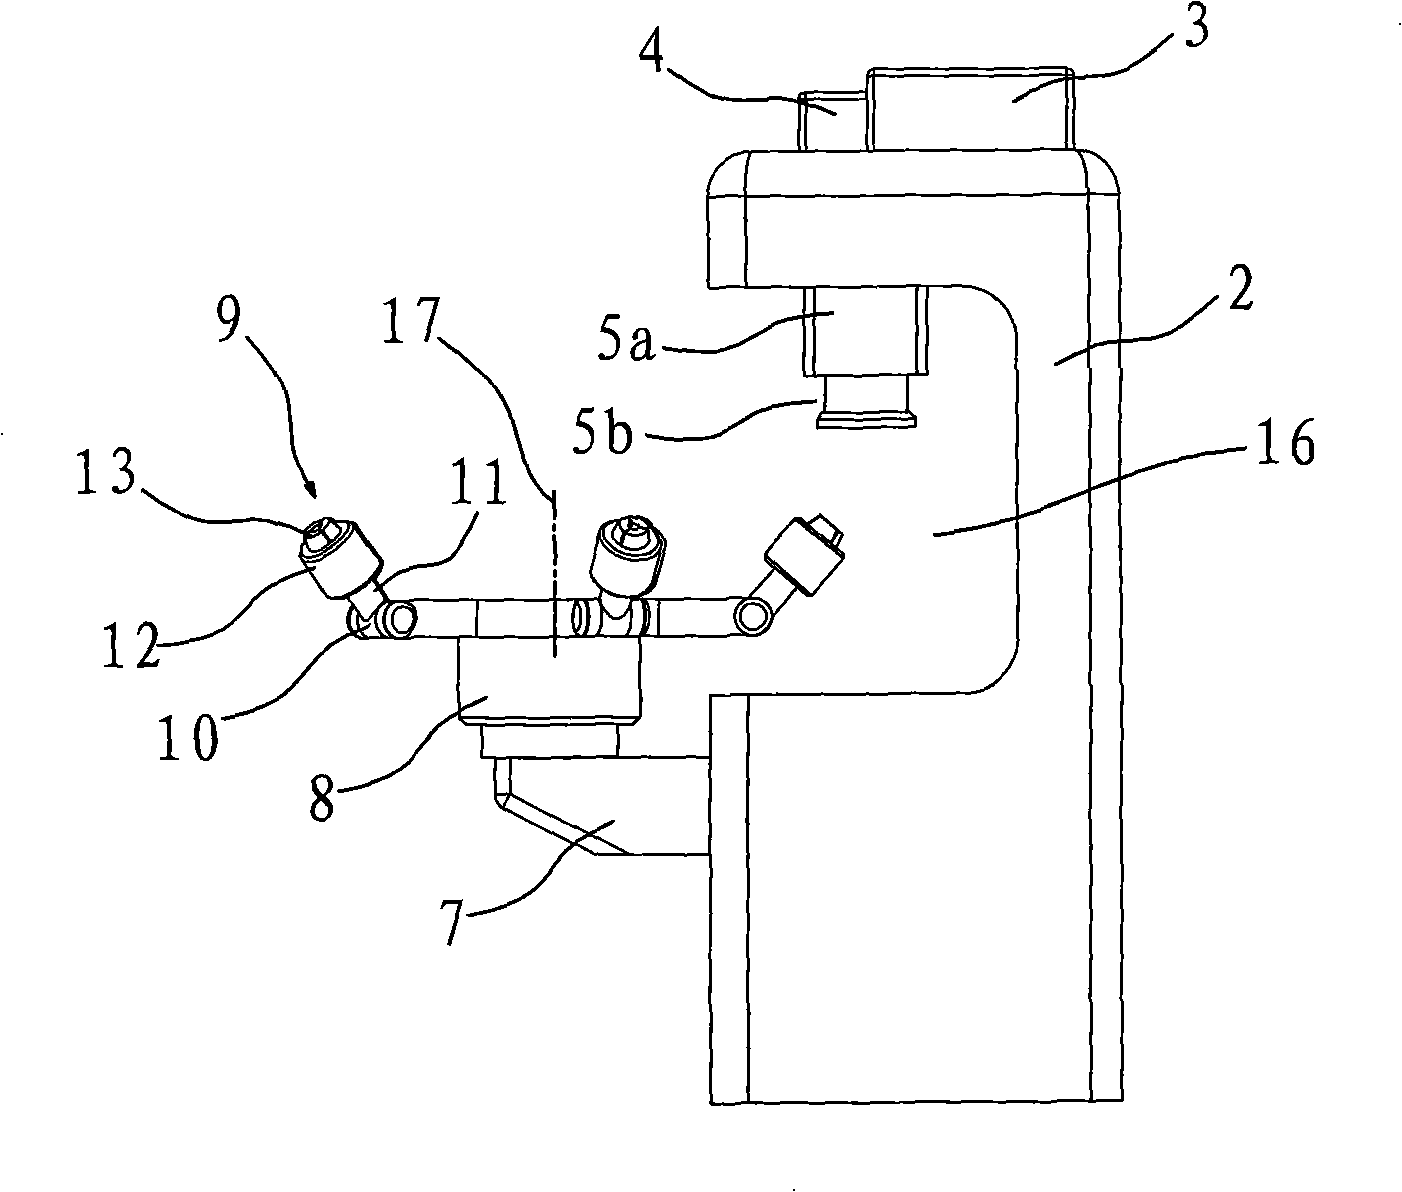 Multi-loading-unit rotary exchange type laser engraving device